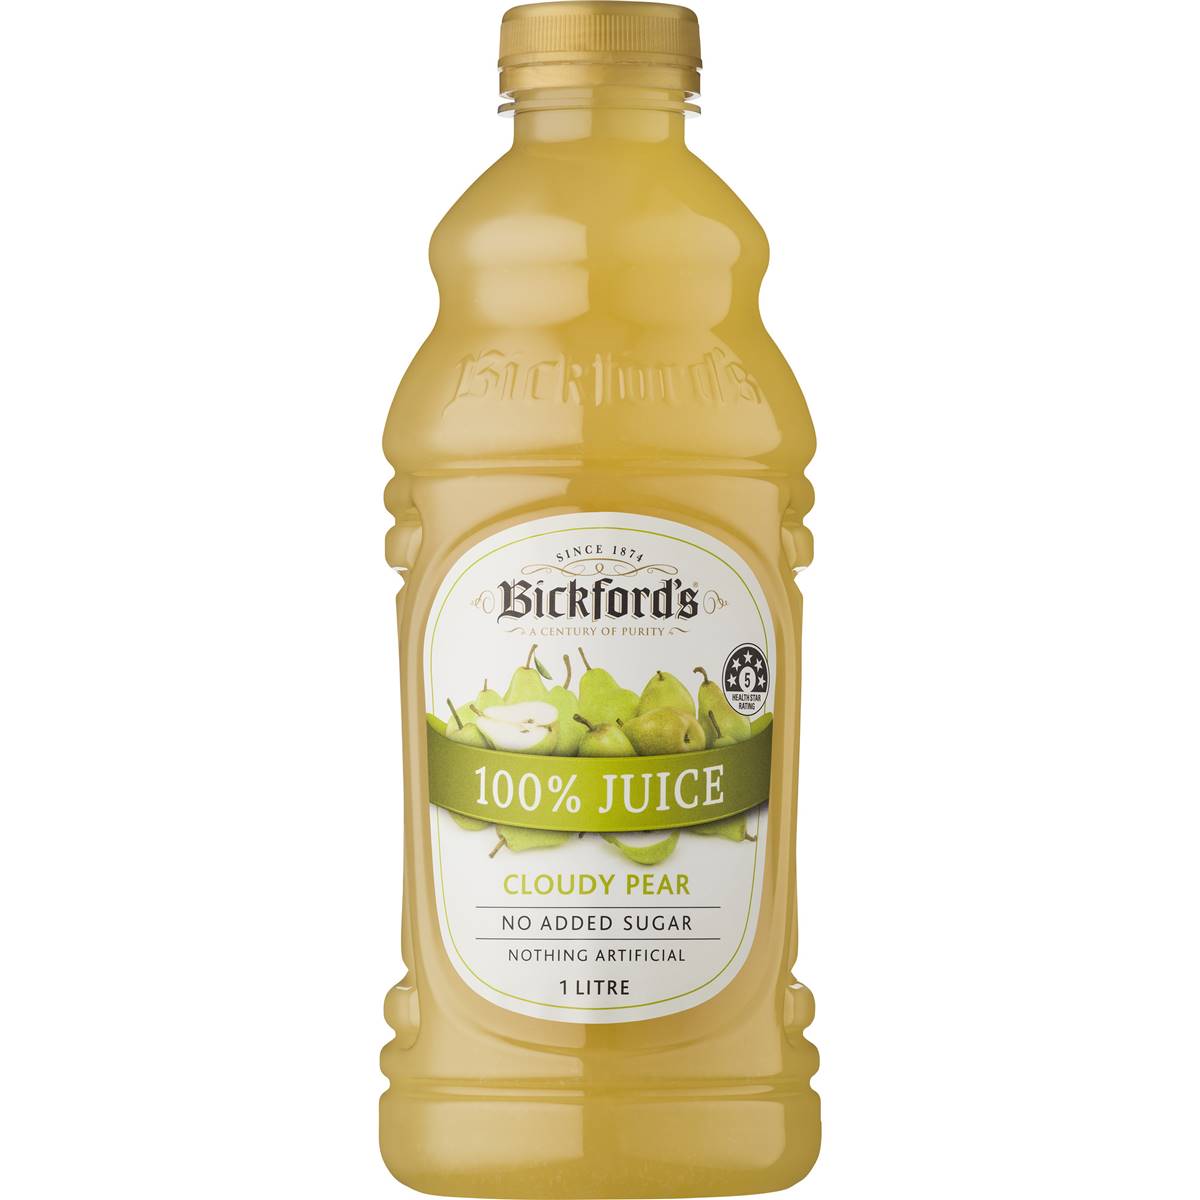 Bickfords Cloudy Pear Juice 1L